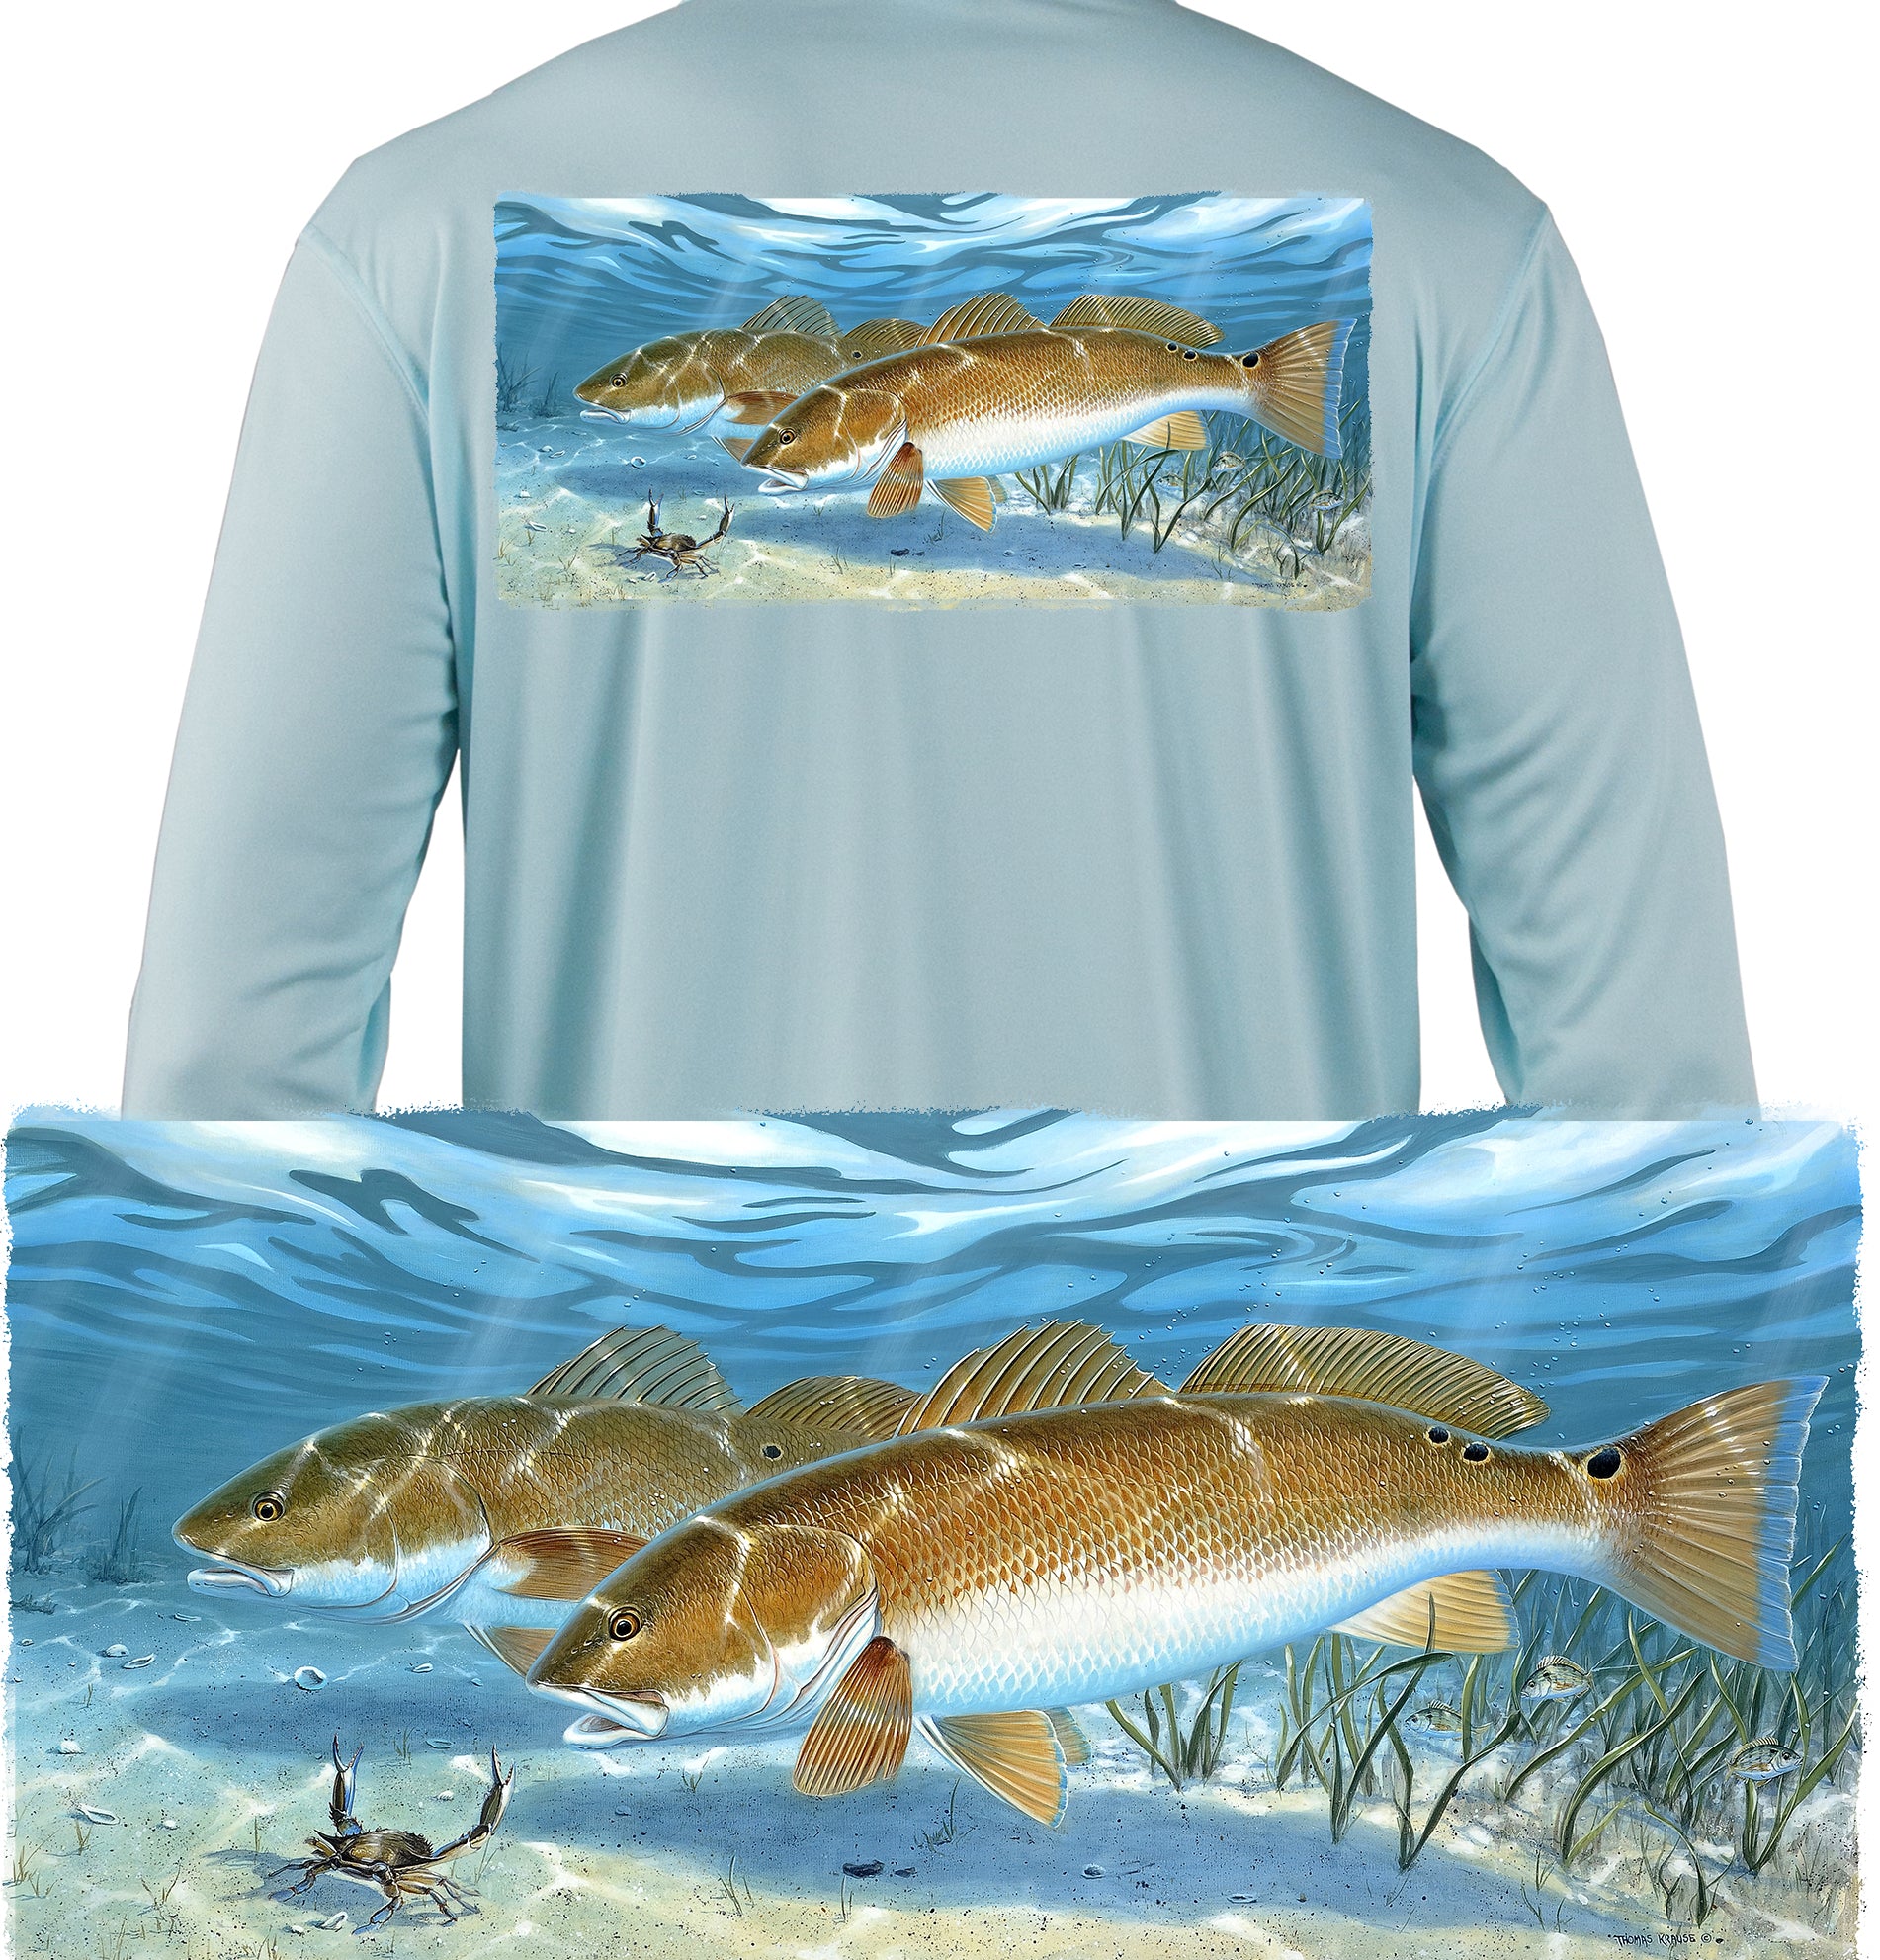 Redfish Hunting Blue Crab Fishing Shirts Men's Quick Dry Lightweight UPF 50+ Long Sleeve Shirts Rash Guard Swim Shirts Hiking Shirts Moisture Wicking